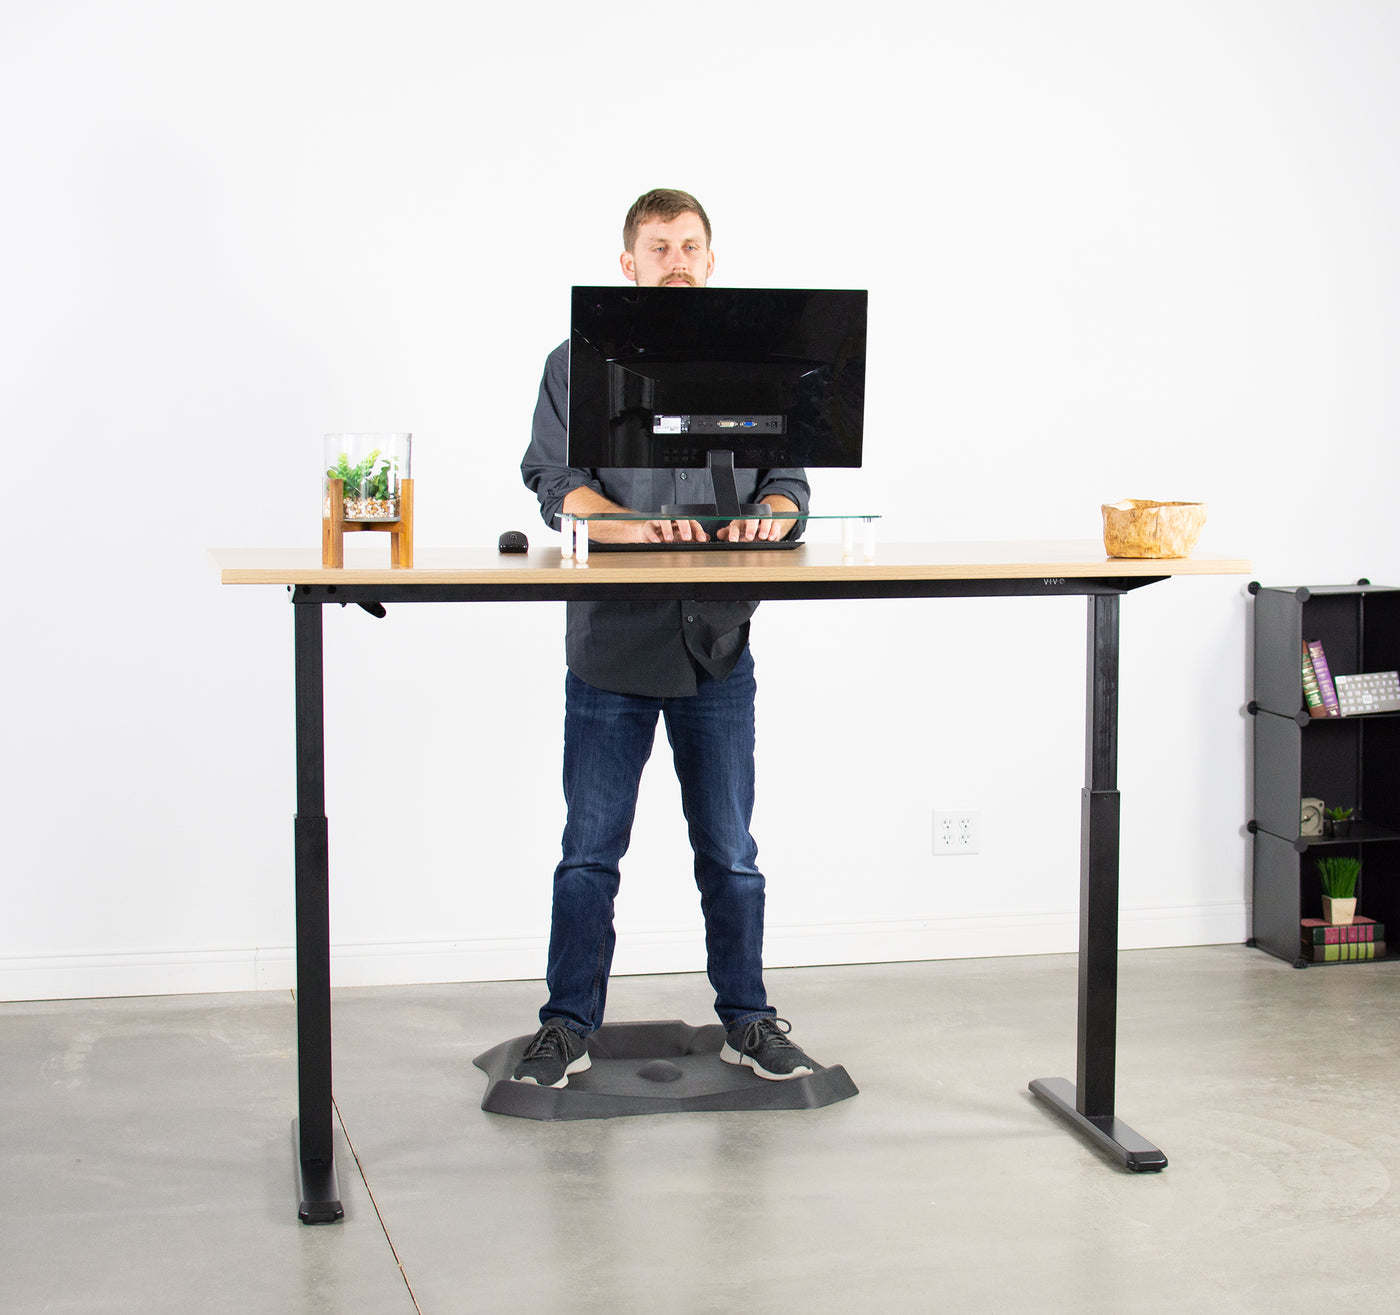 Sturdy manual hand crank height adjustable desk frame.